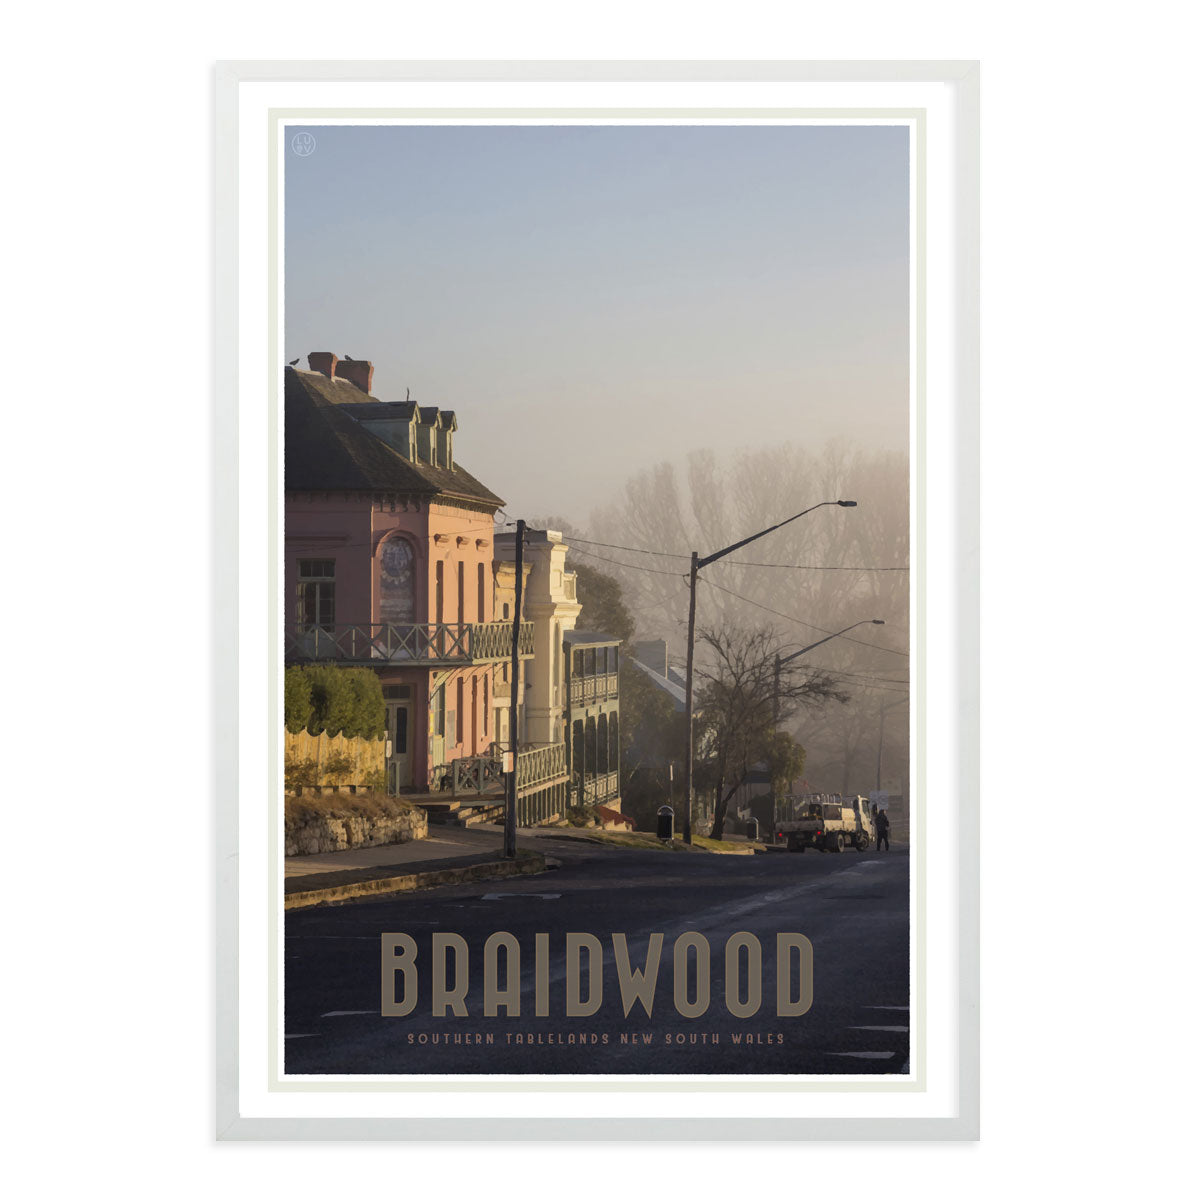 Braidwood Street white framed vintage travel style poster. Original design Places We Luv